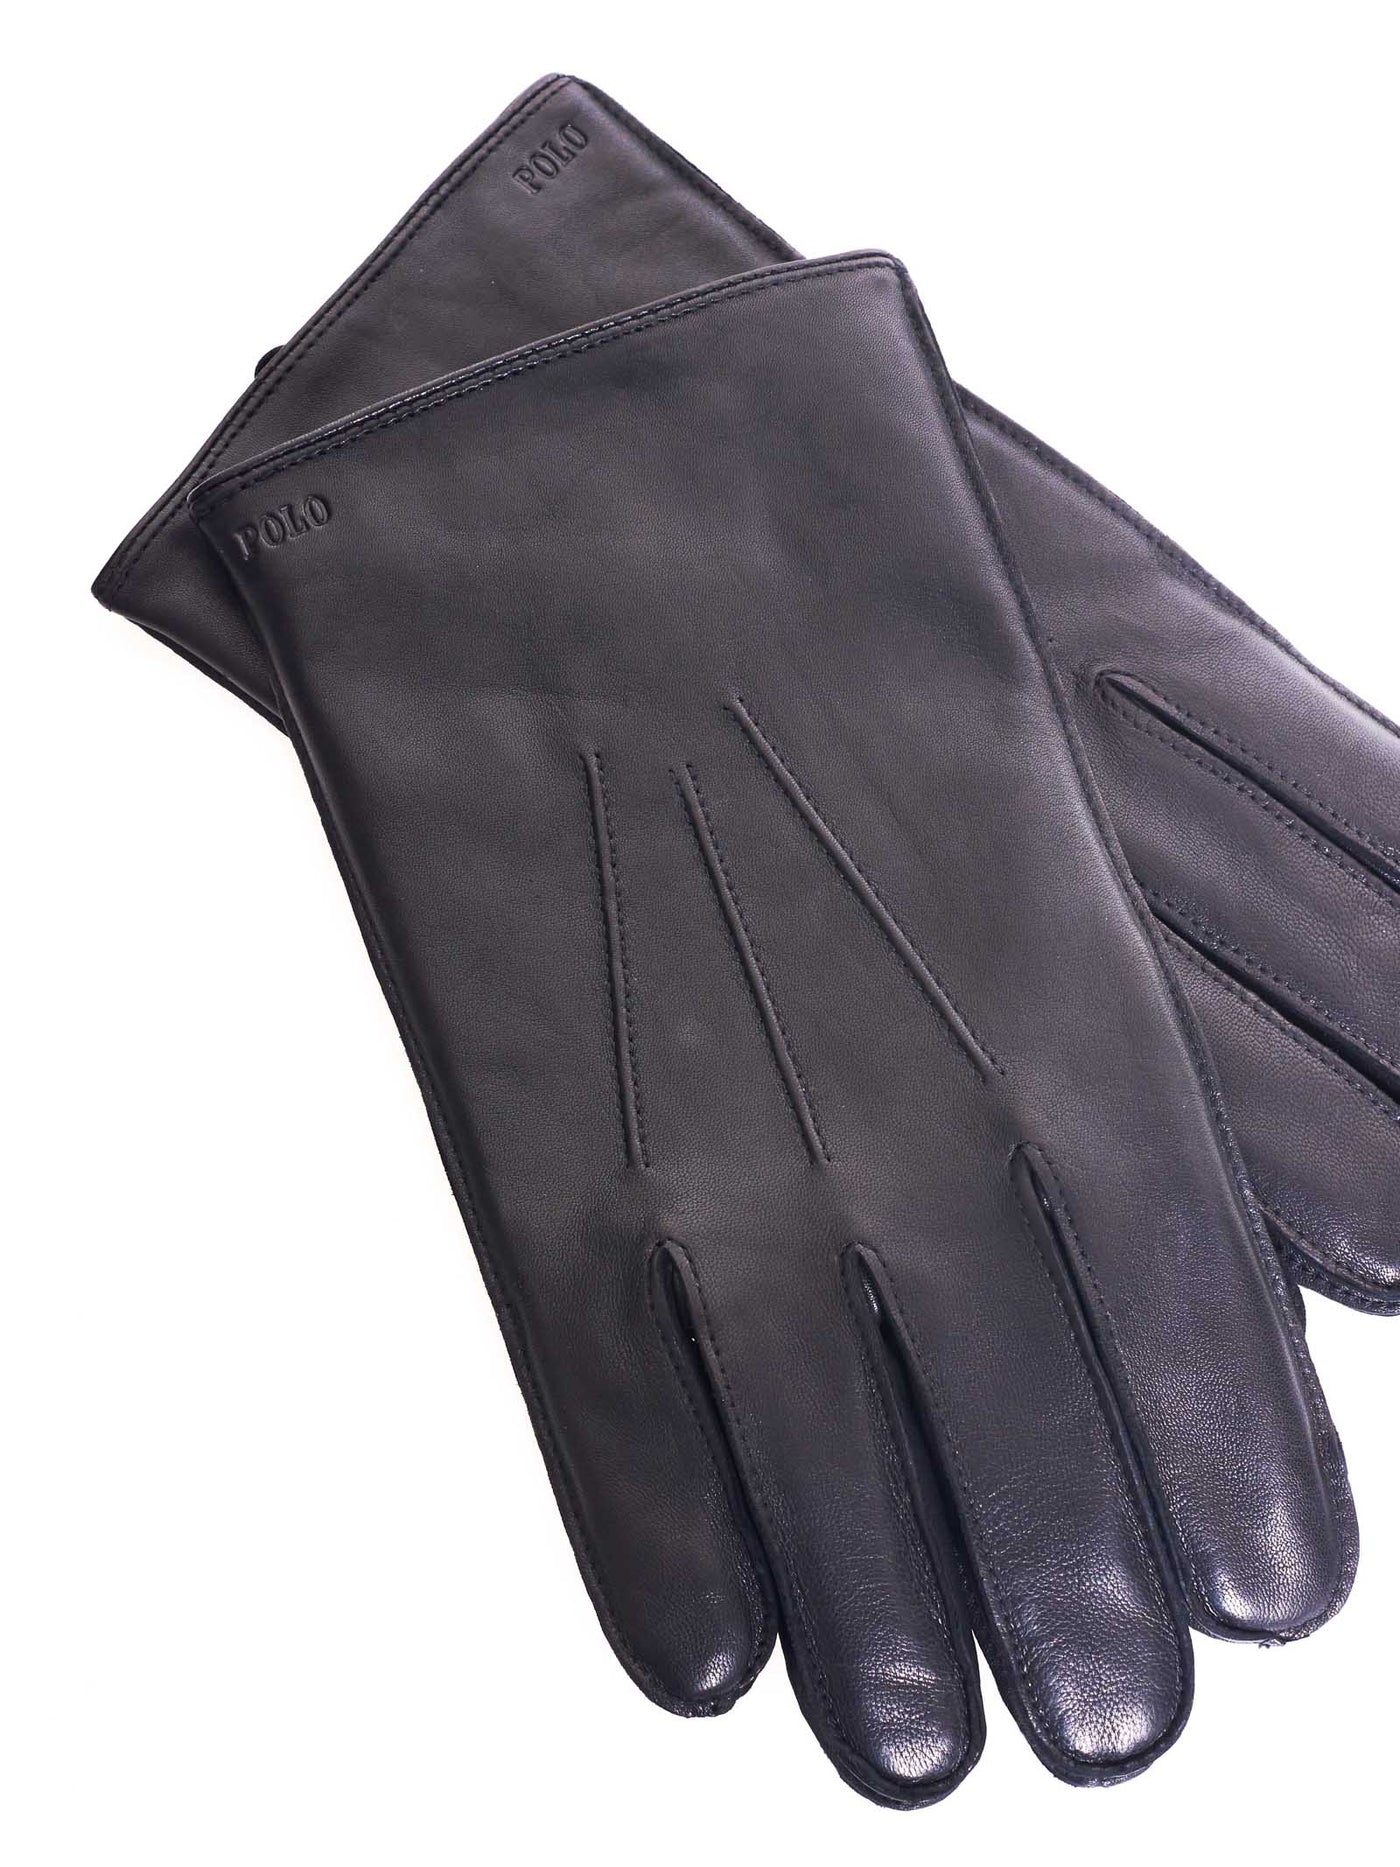 Men's sheepskin gloves with front logo